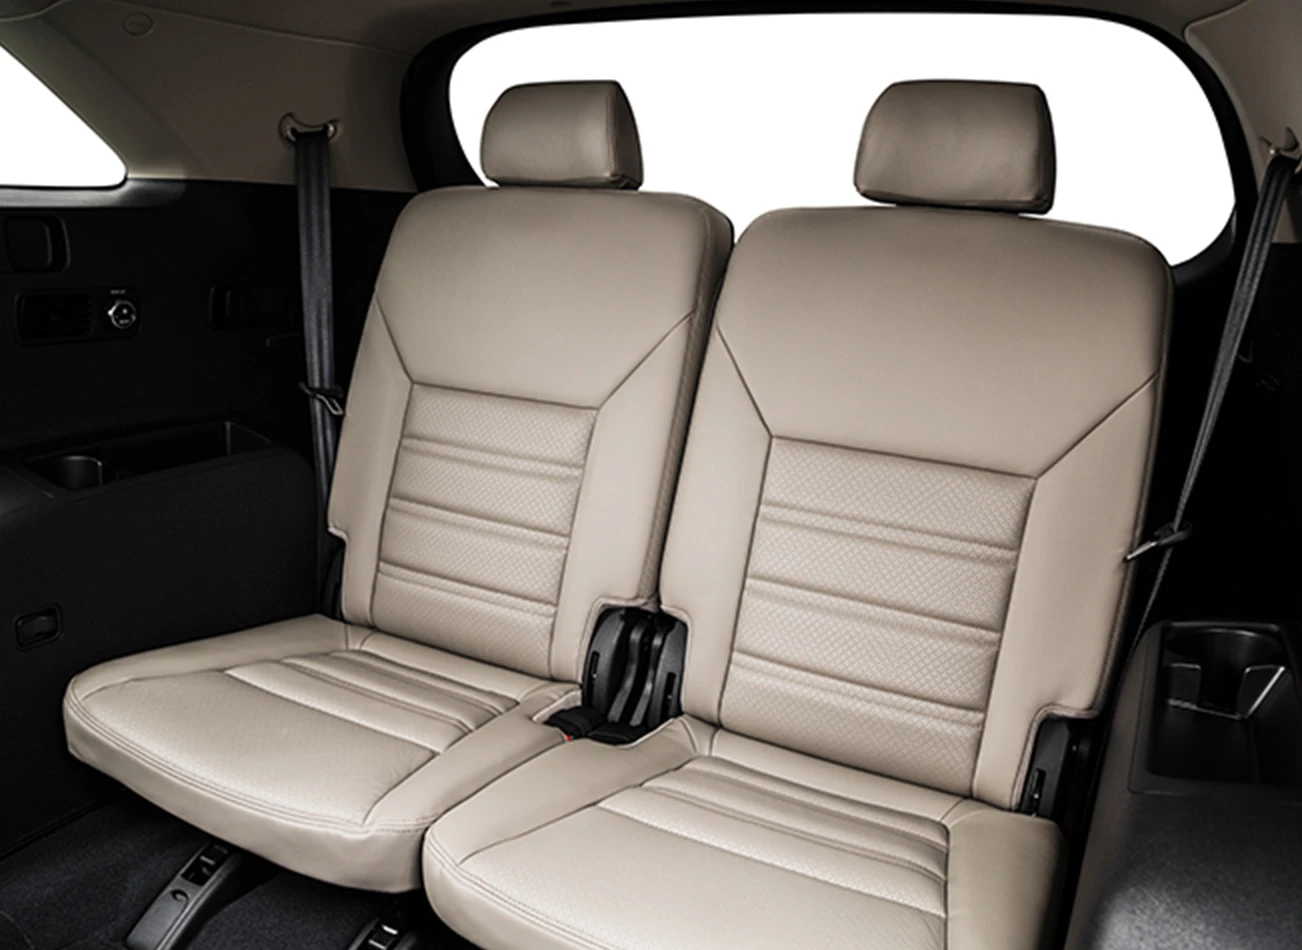 2016 Kia Sorento Review: Back Seats | CarMax